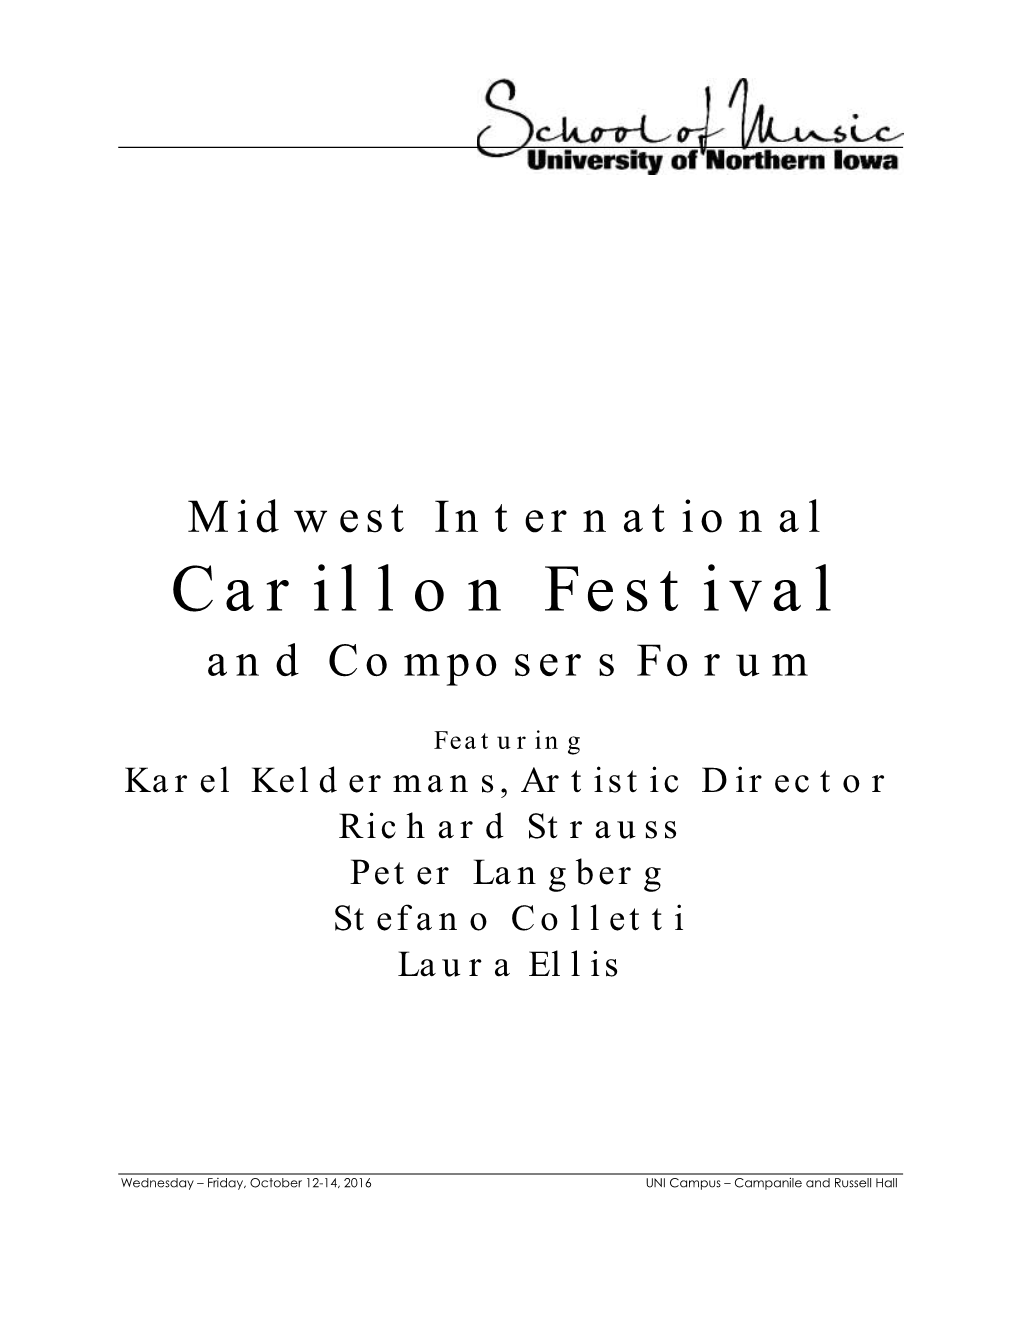 Carillon Festival and Composers Forum